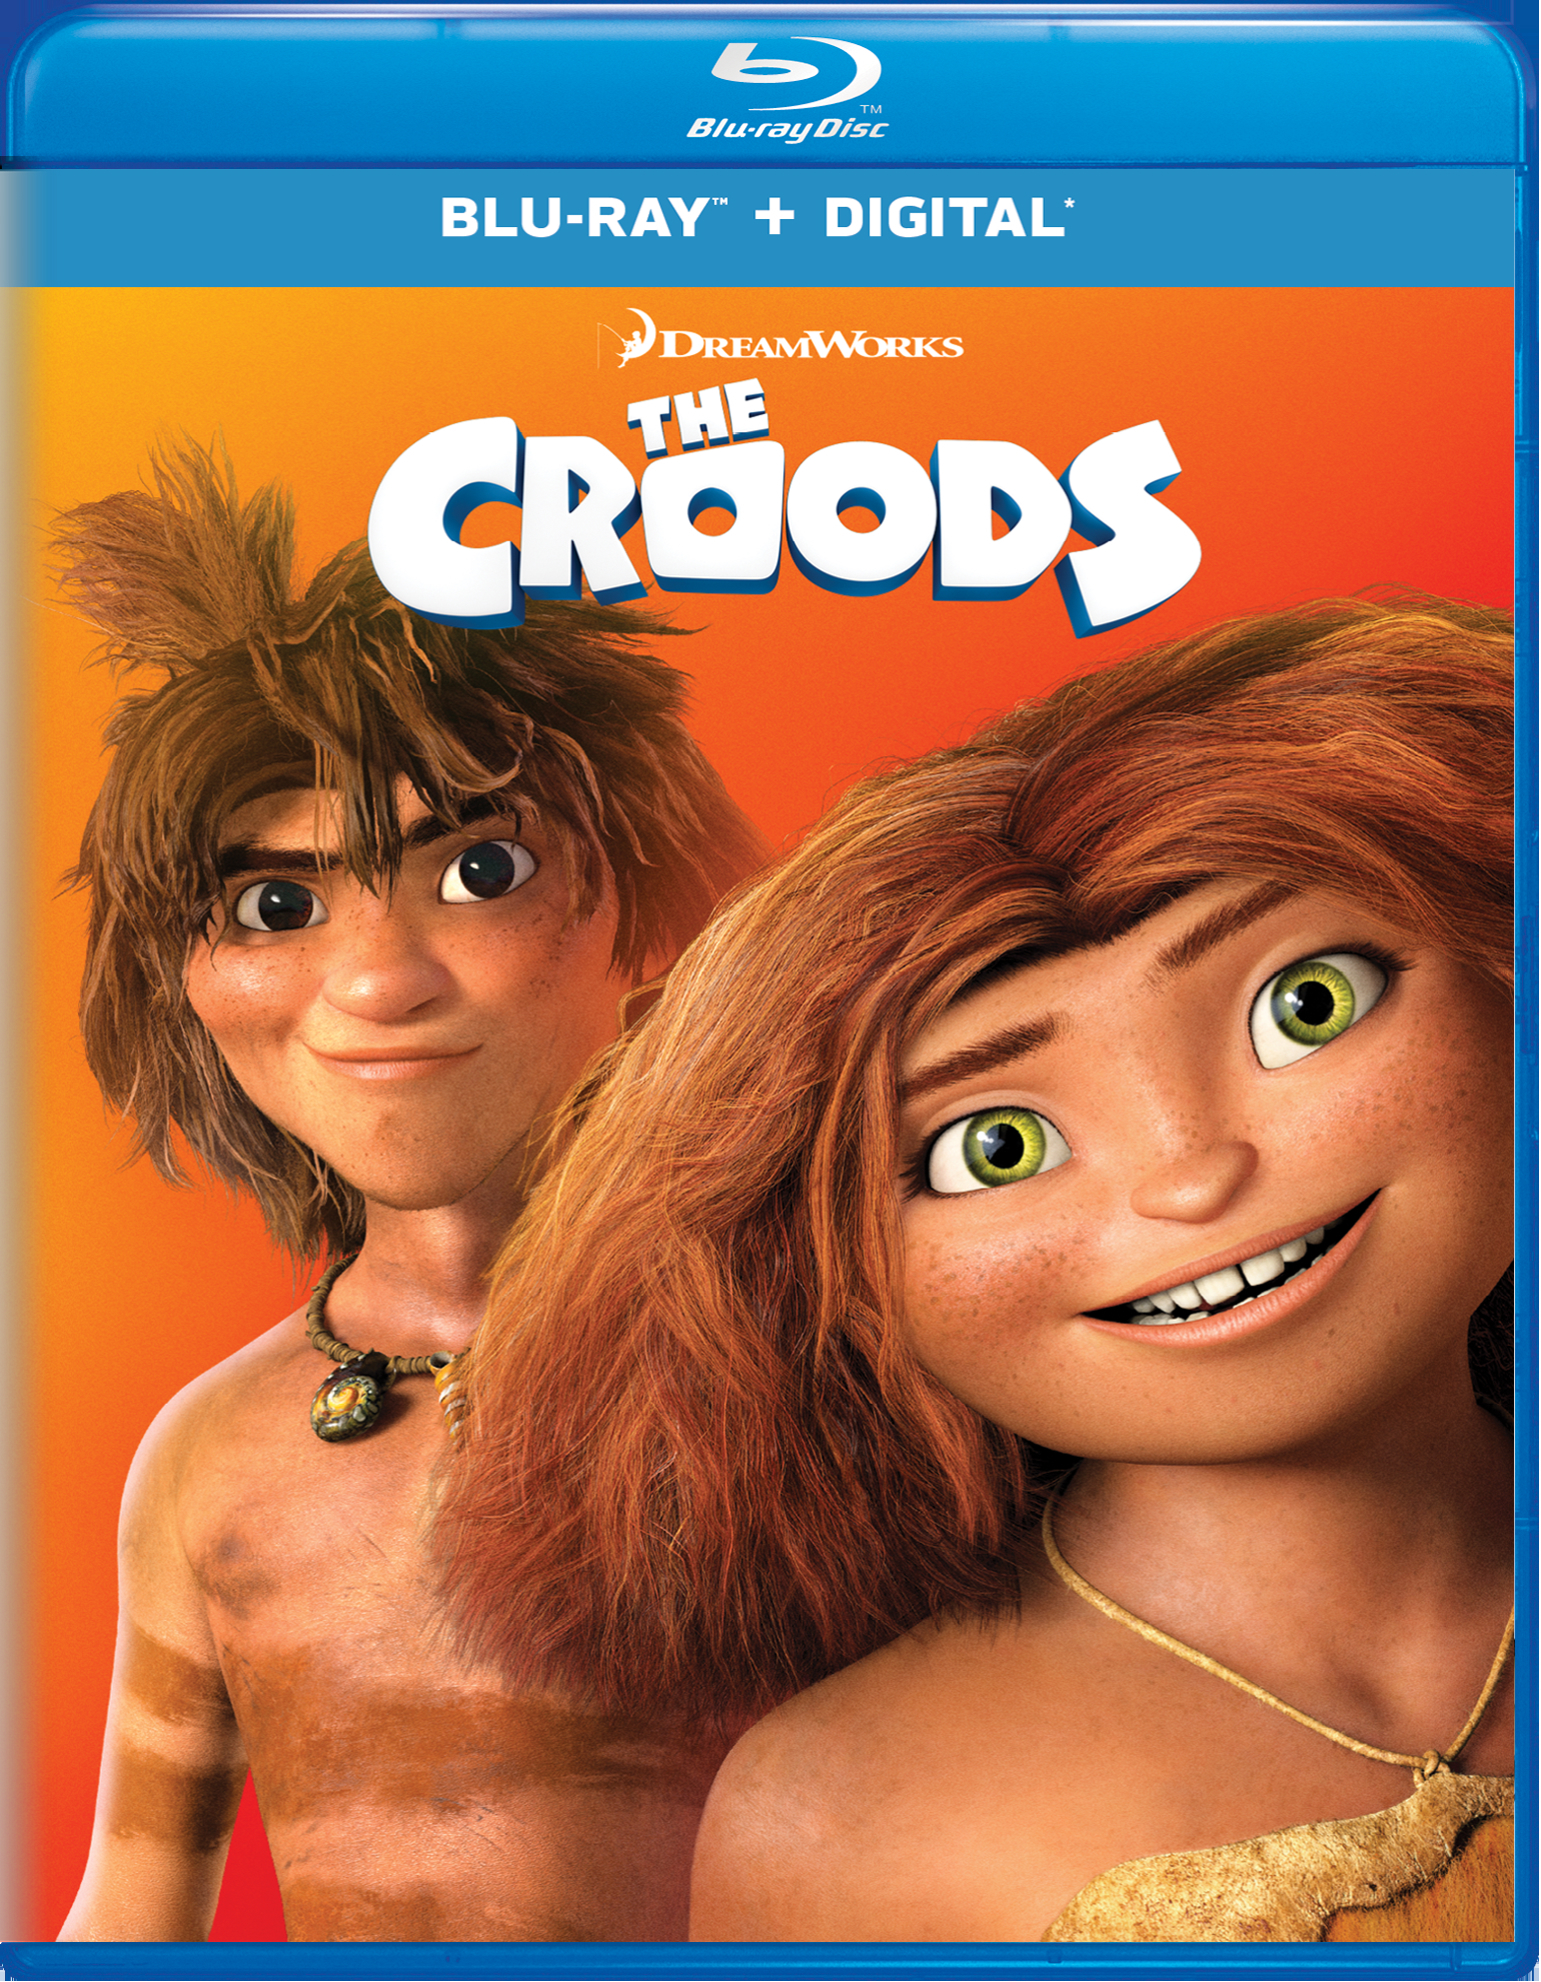 The Croods (Blu-ray New Box Art) - Blu-ray [ 2013 ]  - Children Movies On Blu-ray - Movies On GRUV